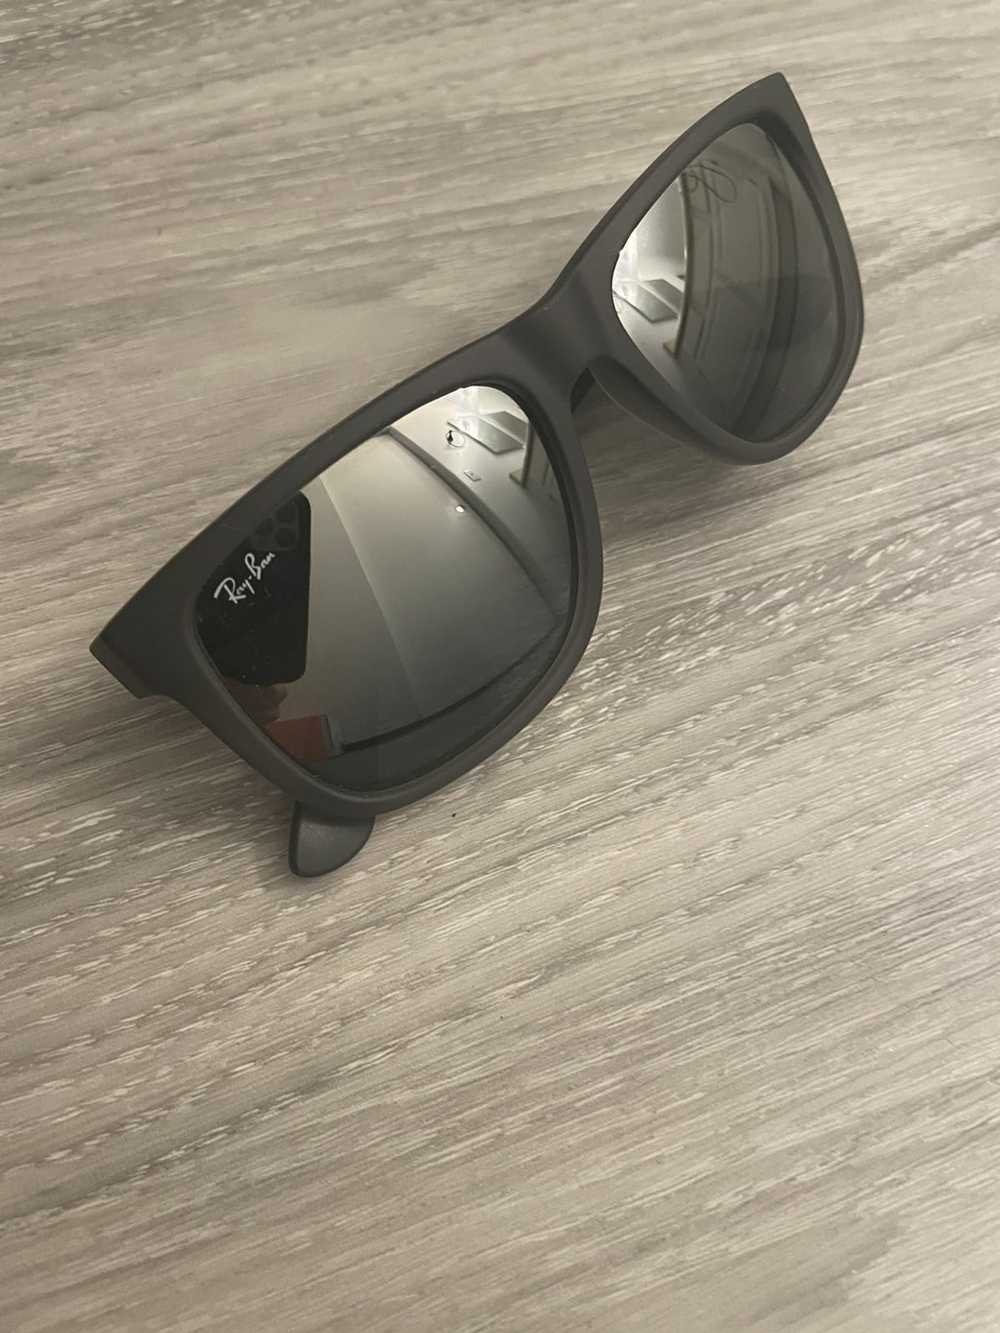 RayBan RayBan Sunglasses - image 6